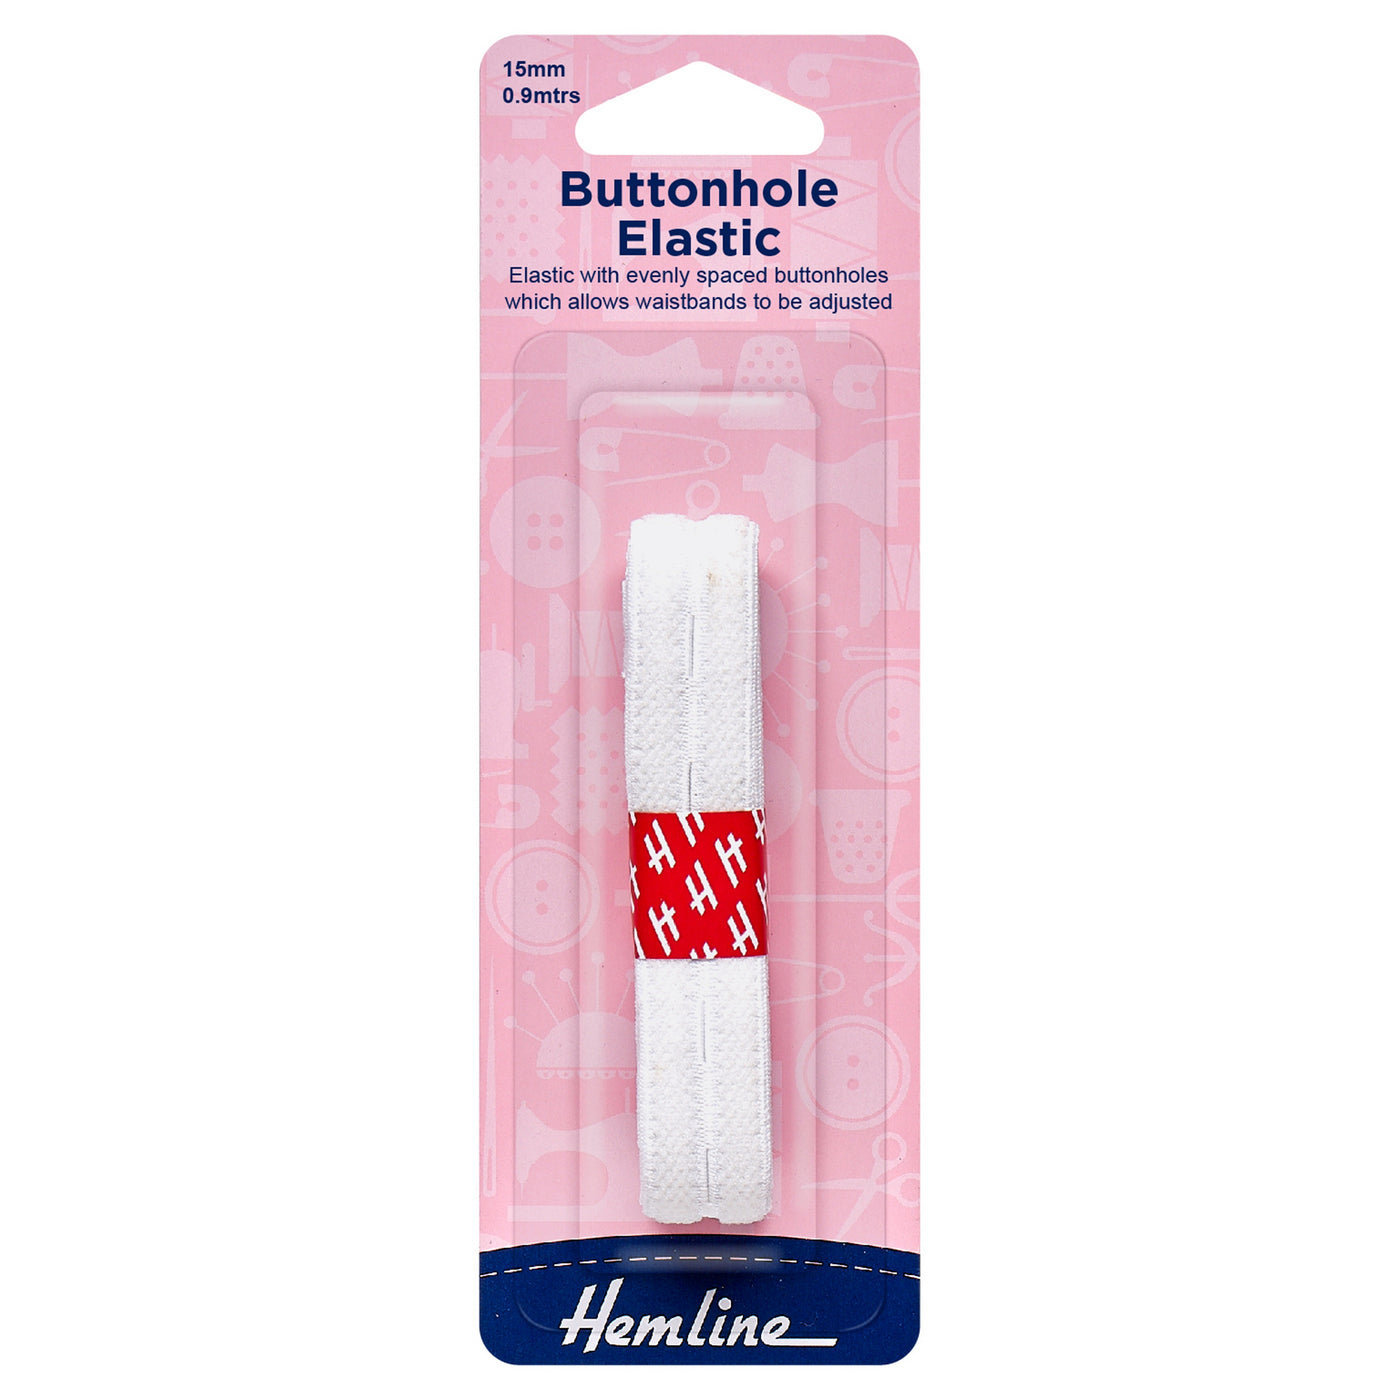 White Hemline Buttonhole Elastic H636: .9 m x 15 mm. Adjustable waistbands